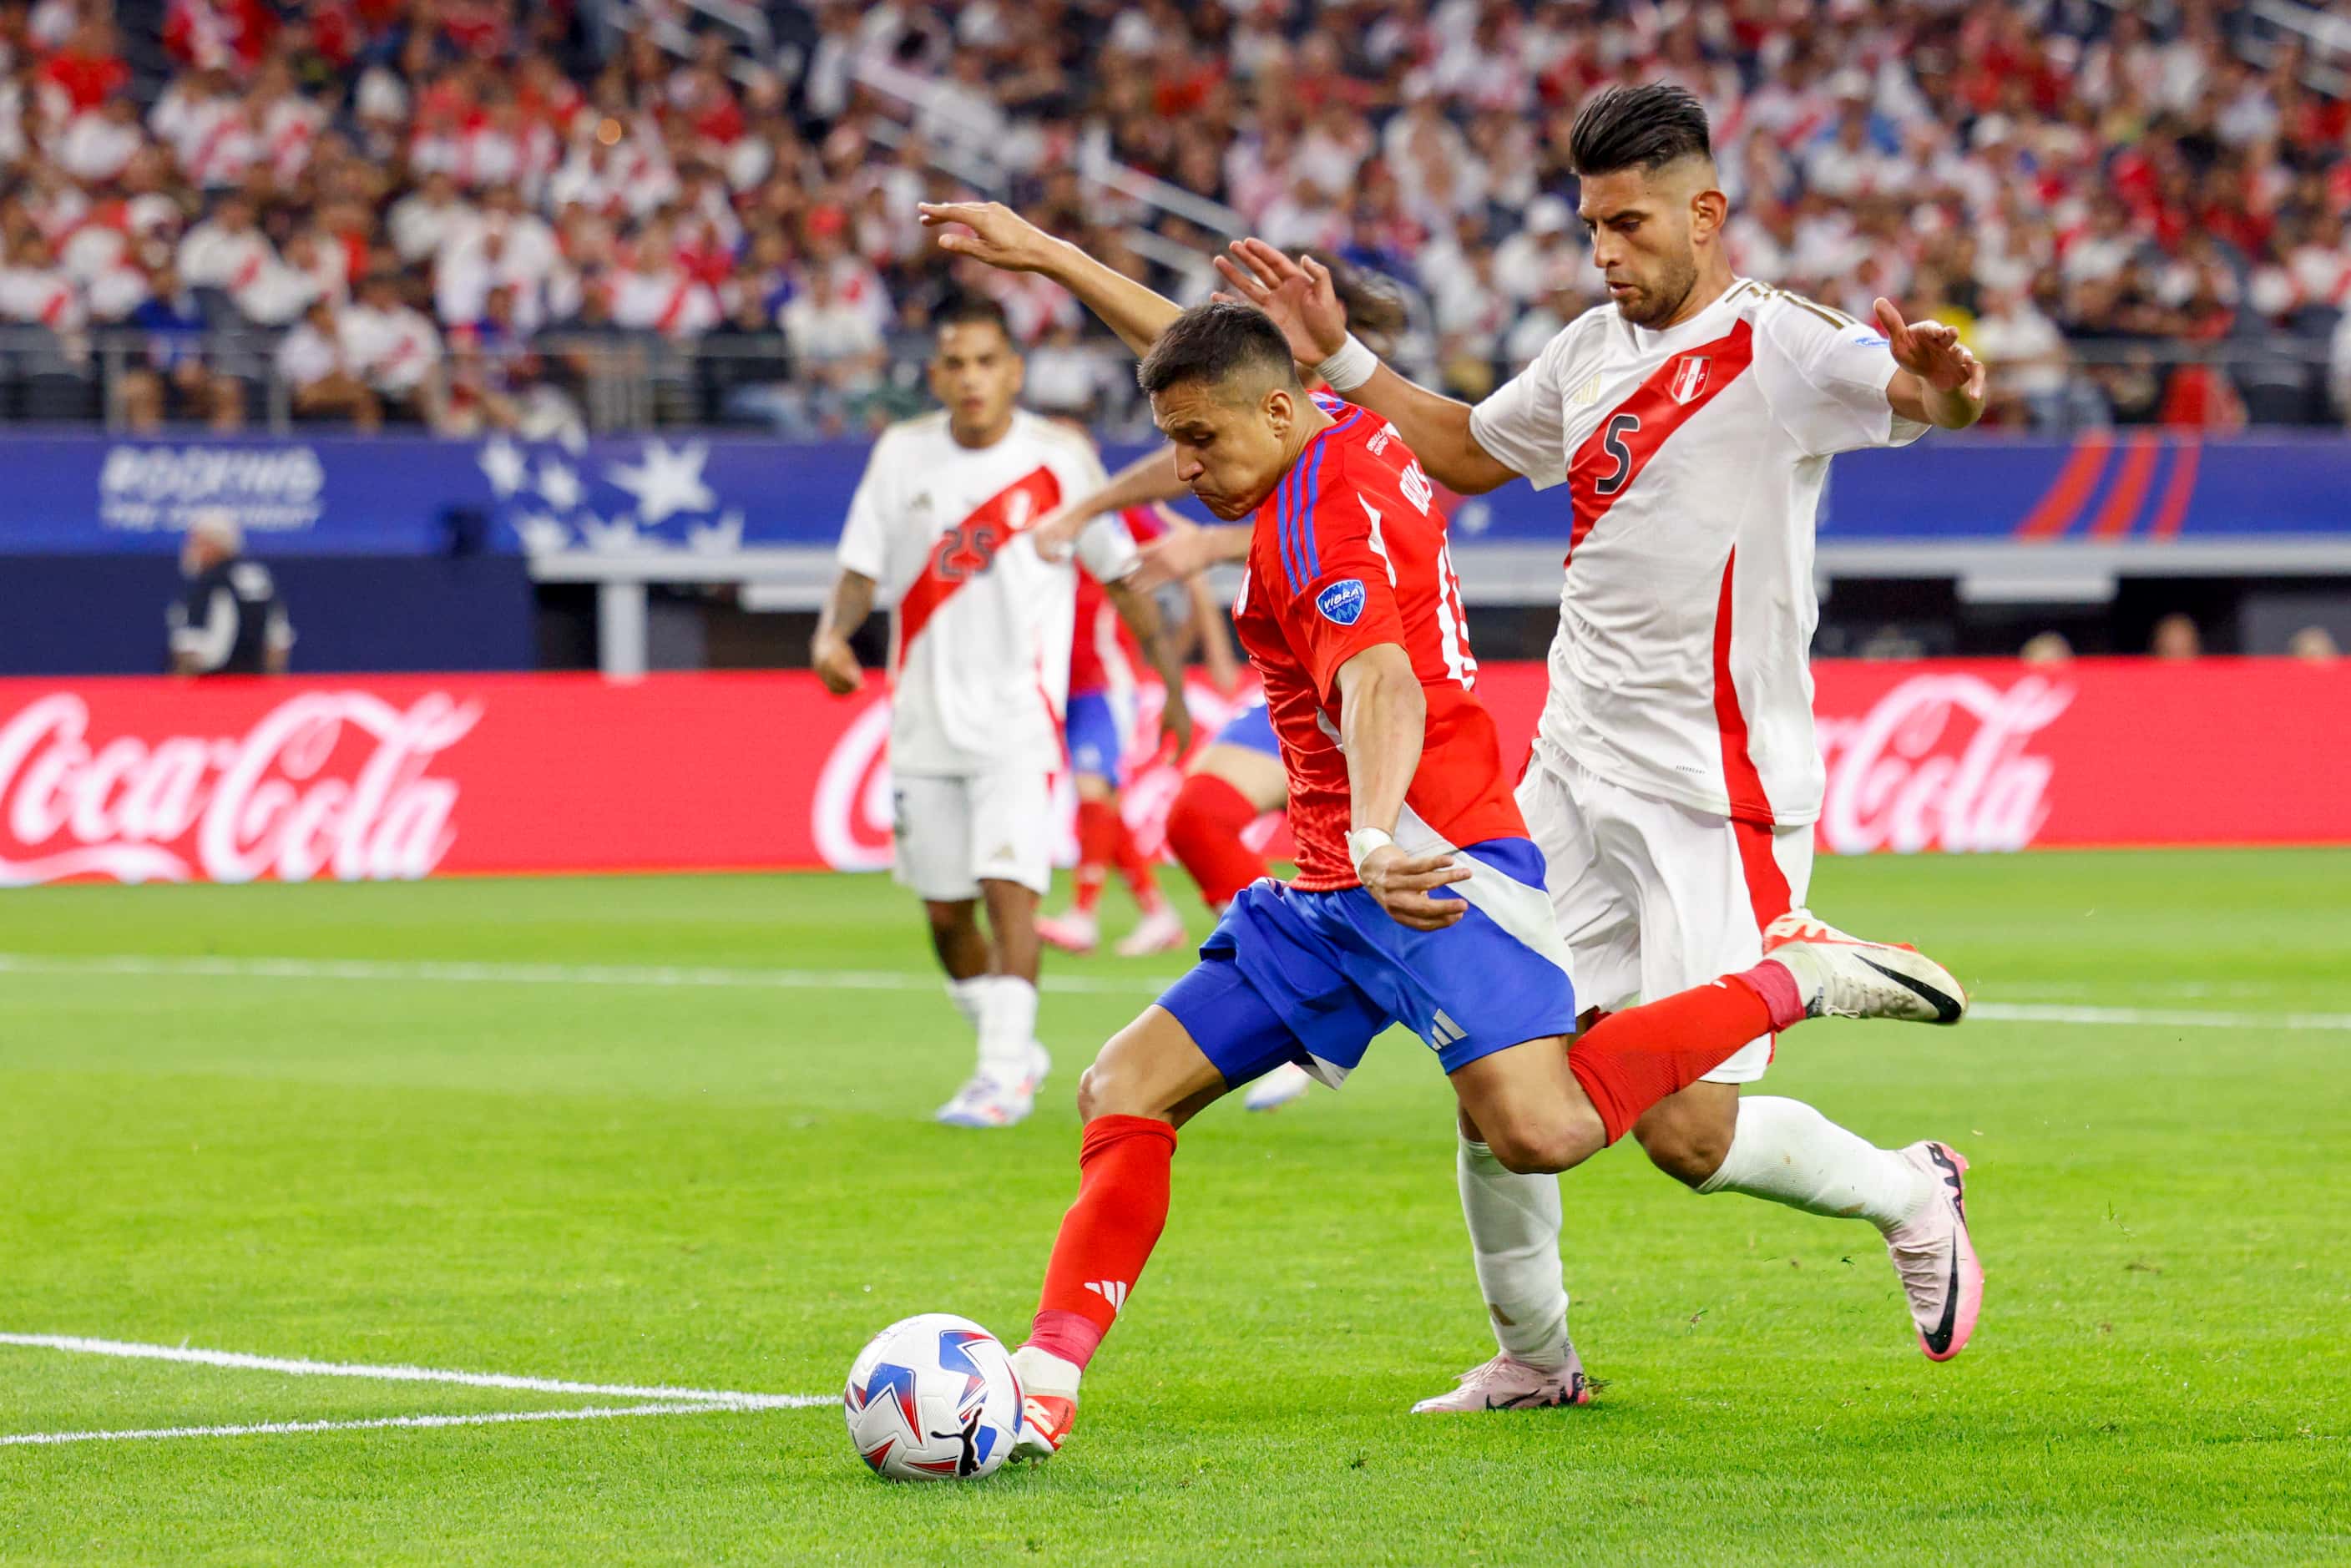 Chile forward Alexis Sánchez (10) shoots the ball ahead of Peru defender Carlos Zambrano (5)...